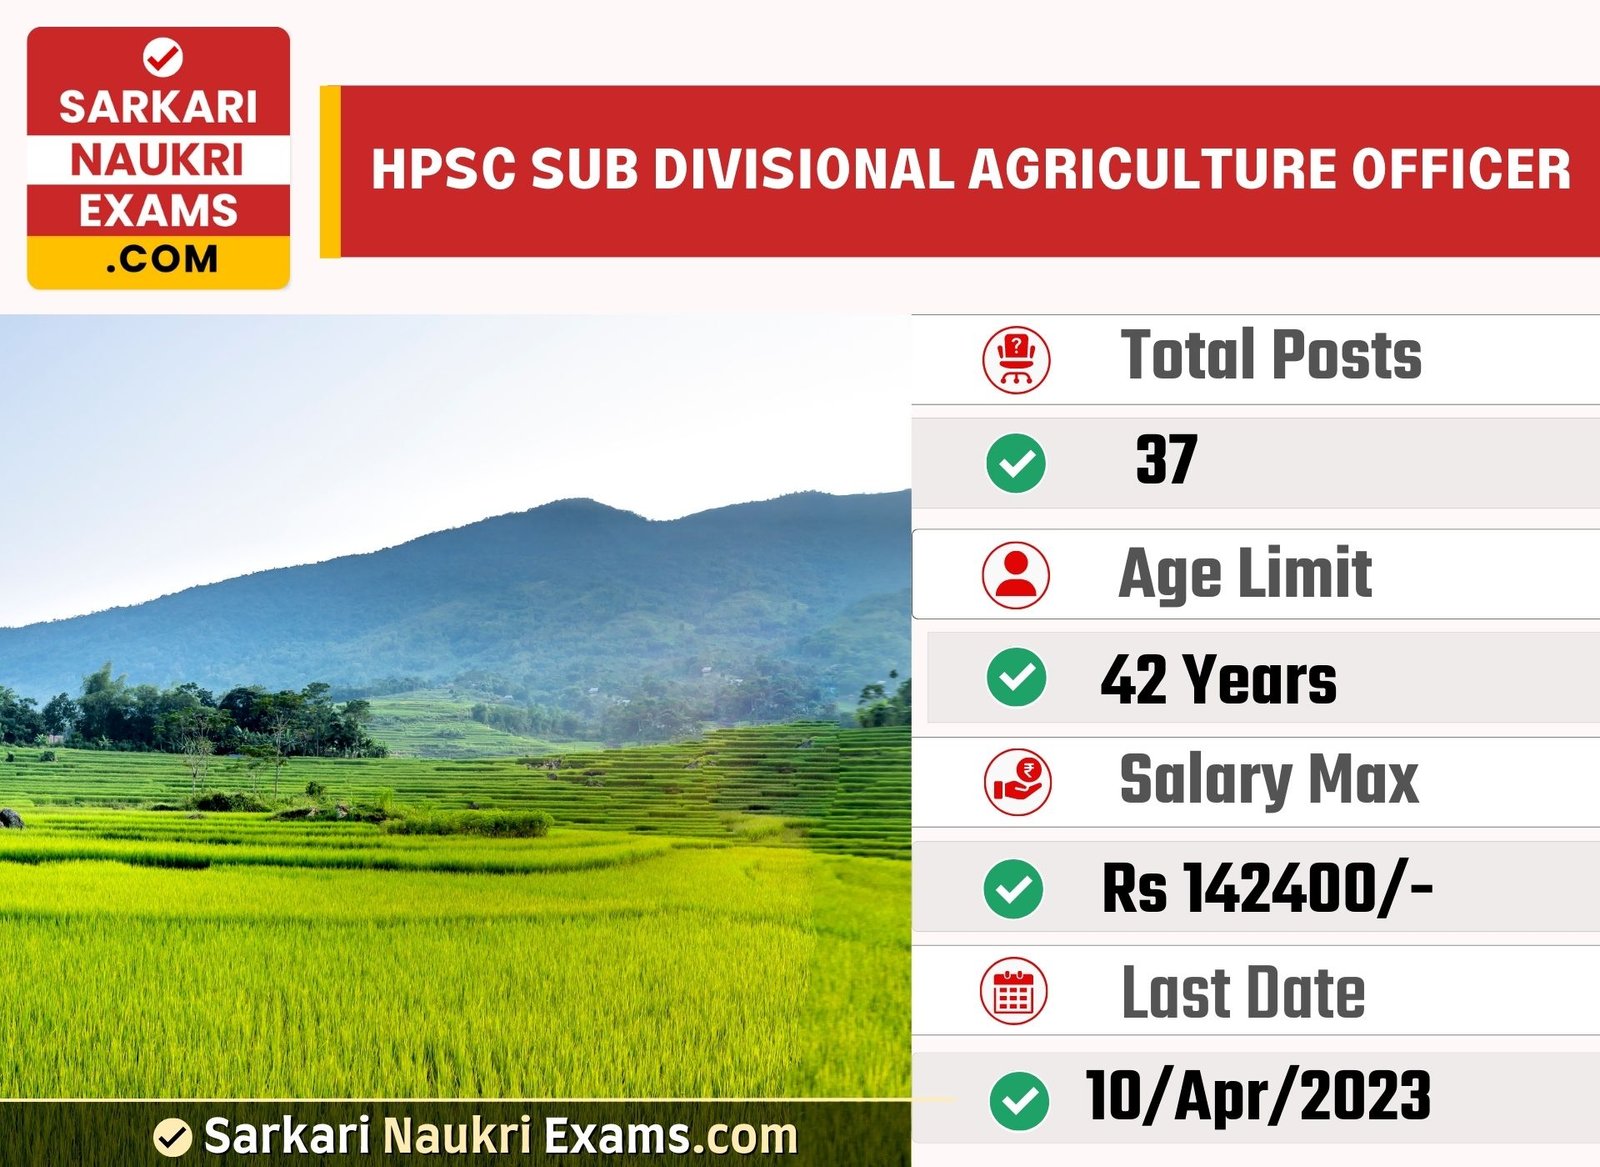 HPSC Sub Divisional Agriculture Officer Recruitment Form 2023 | Last Date 10 April